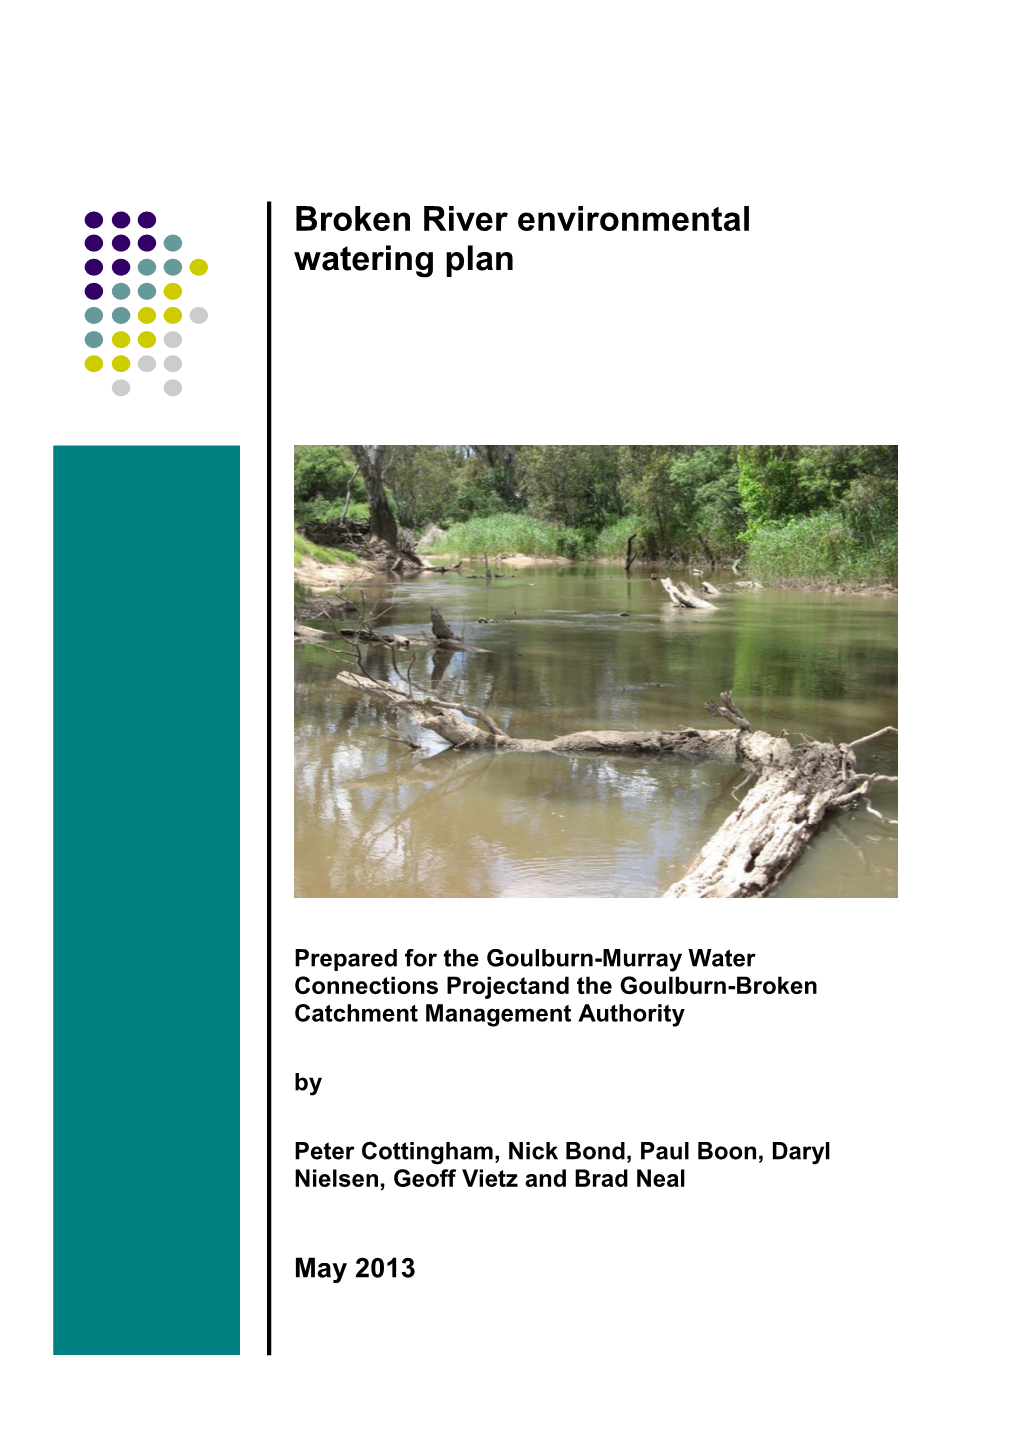 Broken River Environmental Watering Plan